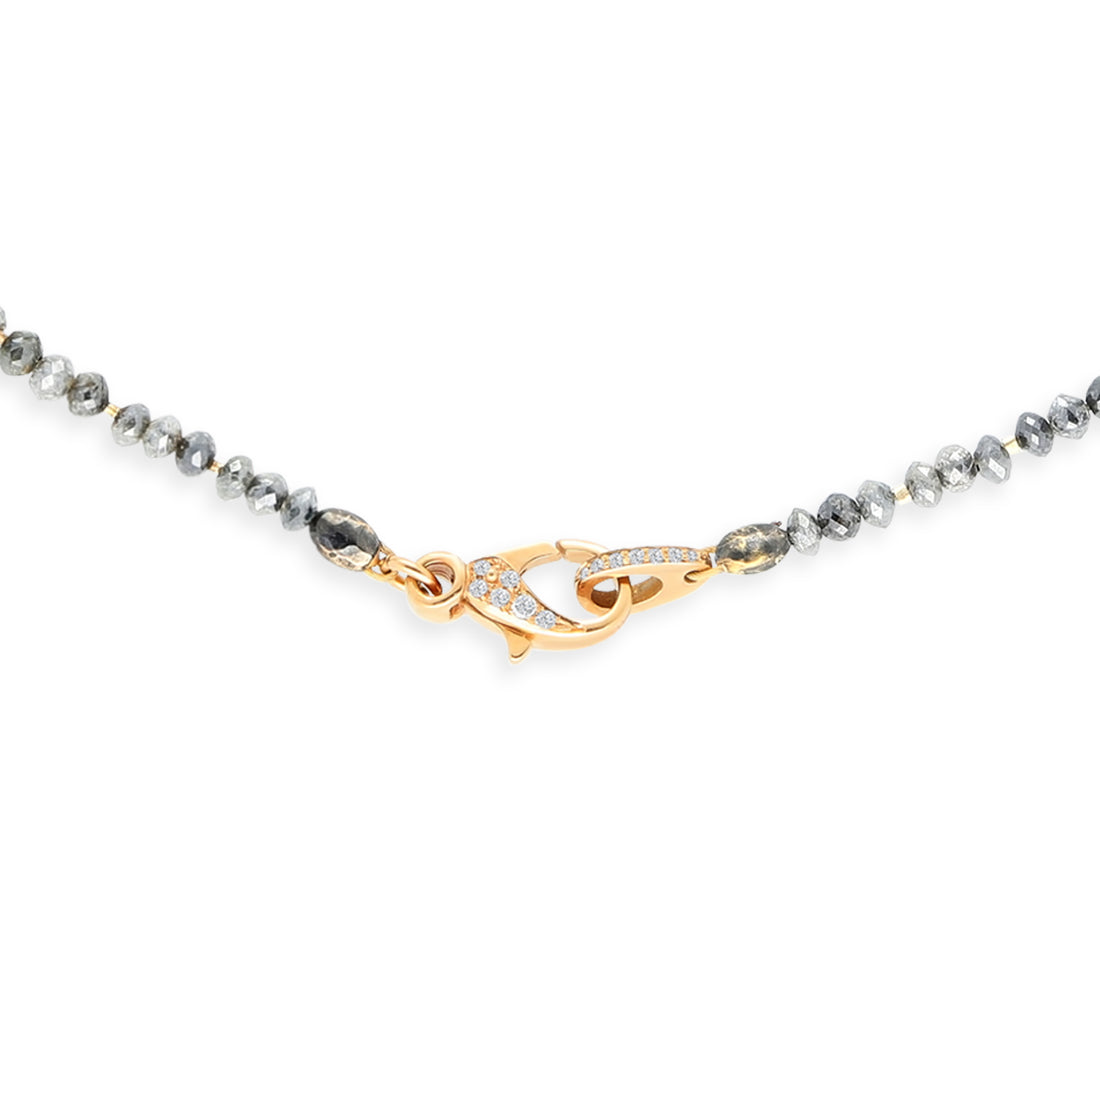 Gray Diamond Beaded Necklace - 48 Carat